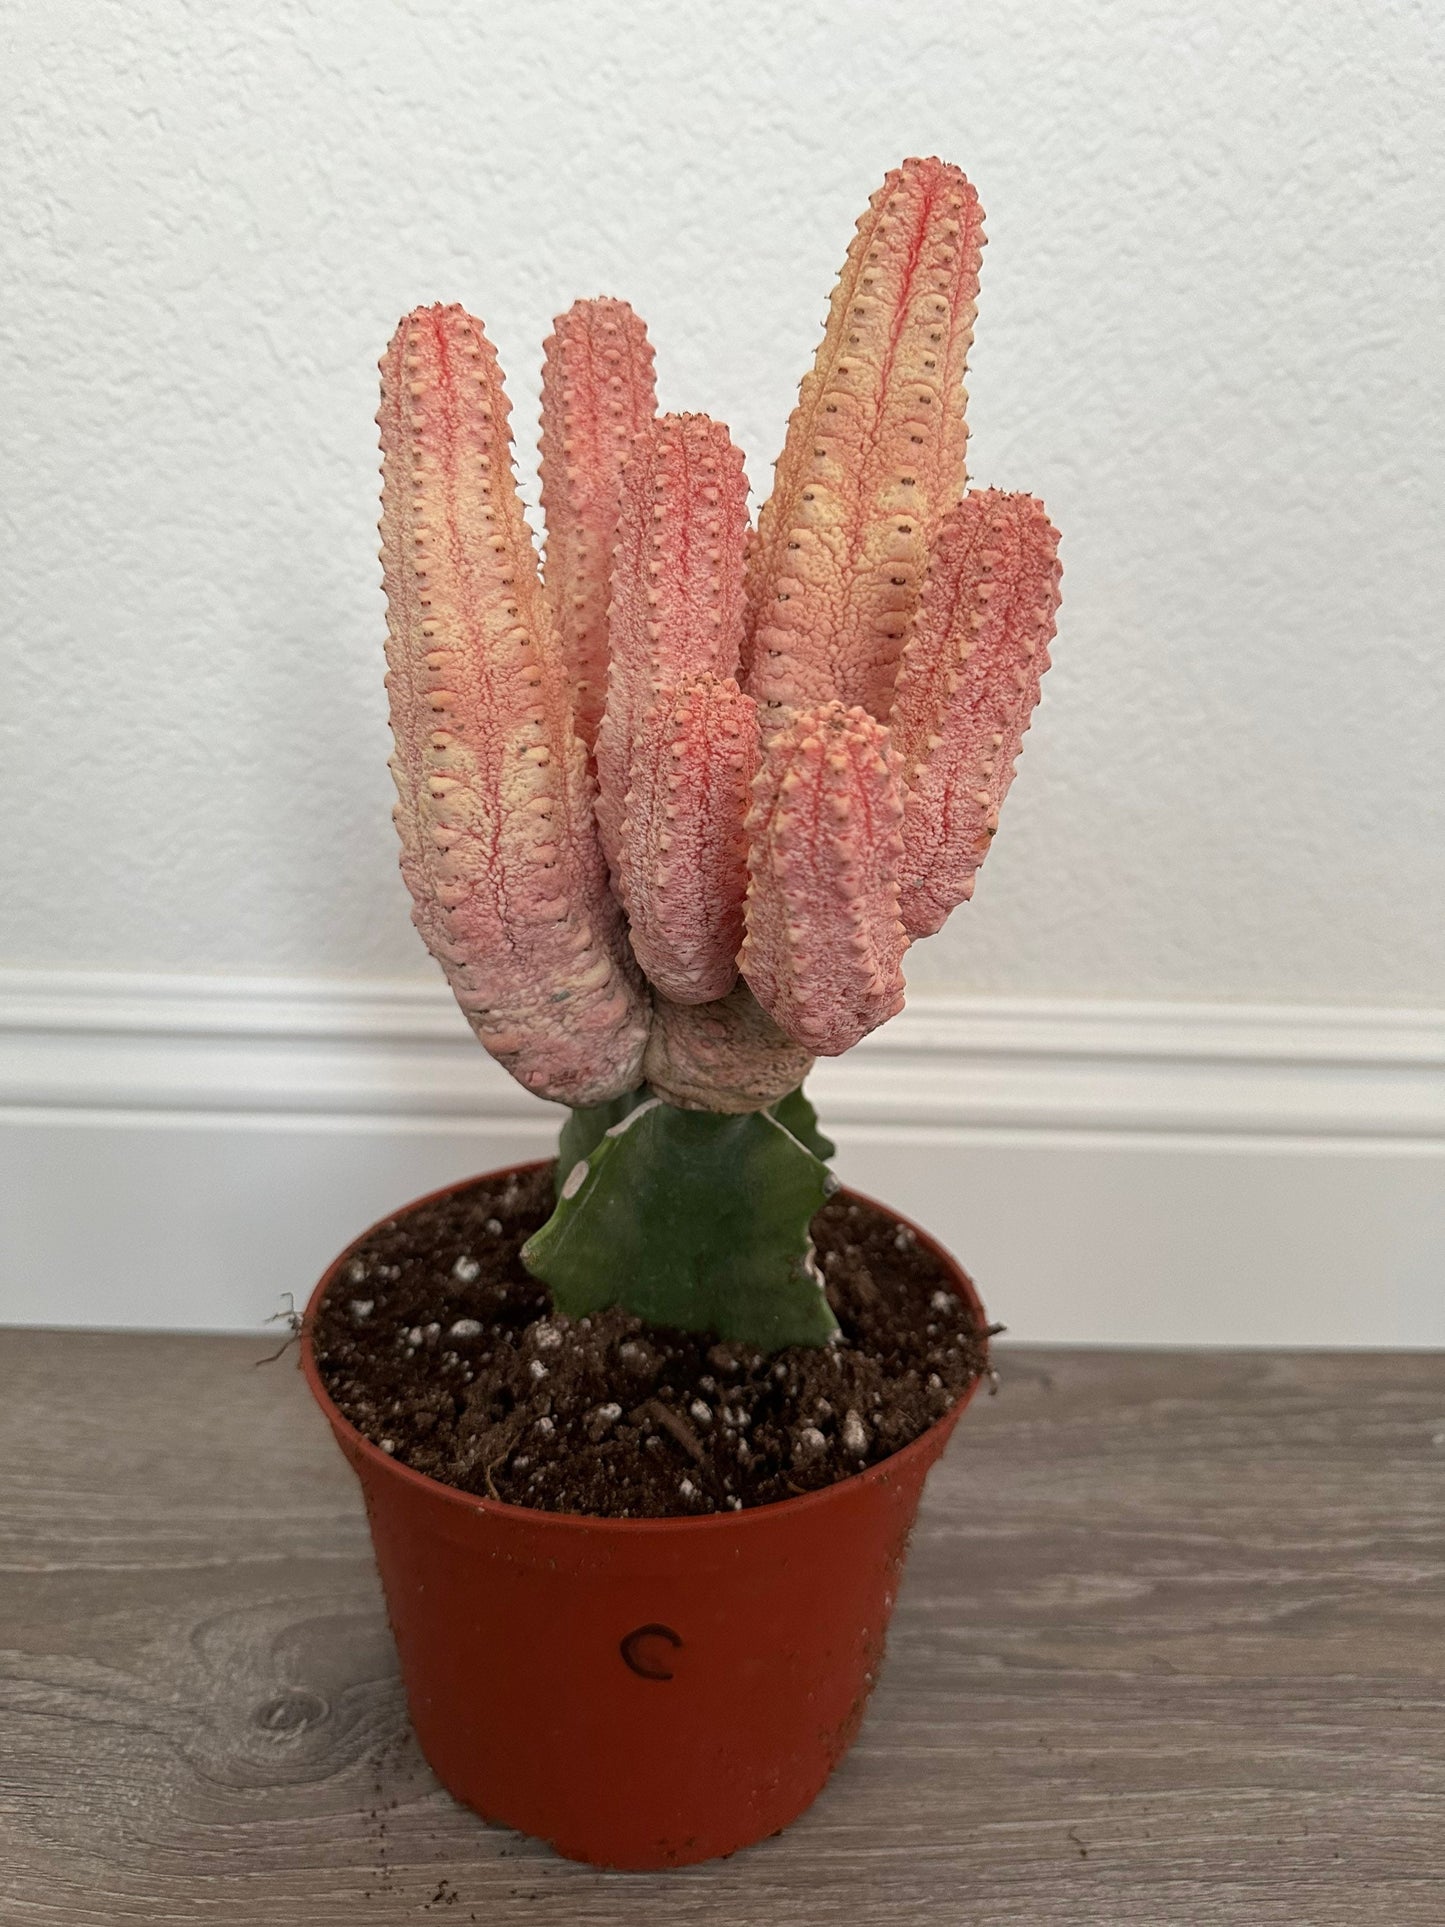 Euphorbia Abdelkuri Damask Pink Cluster or Single Option - Unique Live Cactus - Candelabra-like Succulent